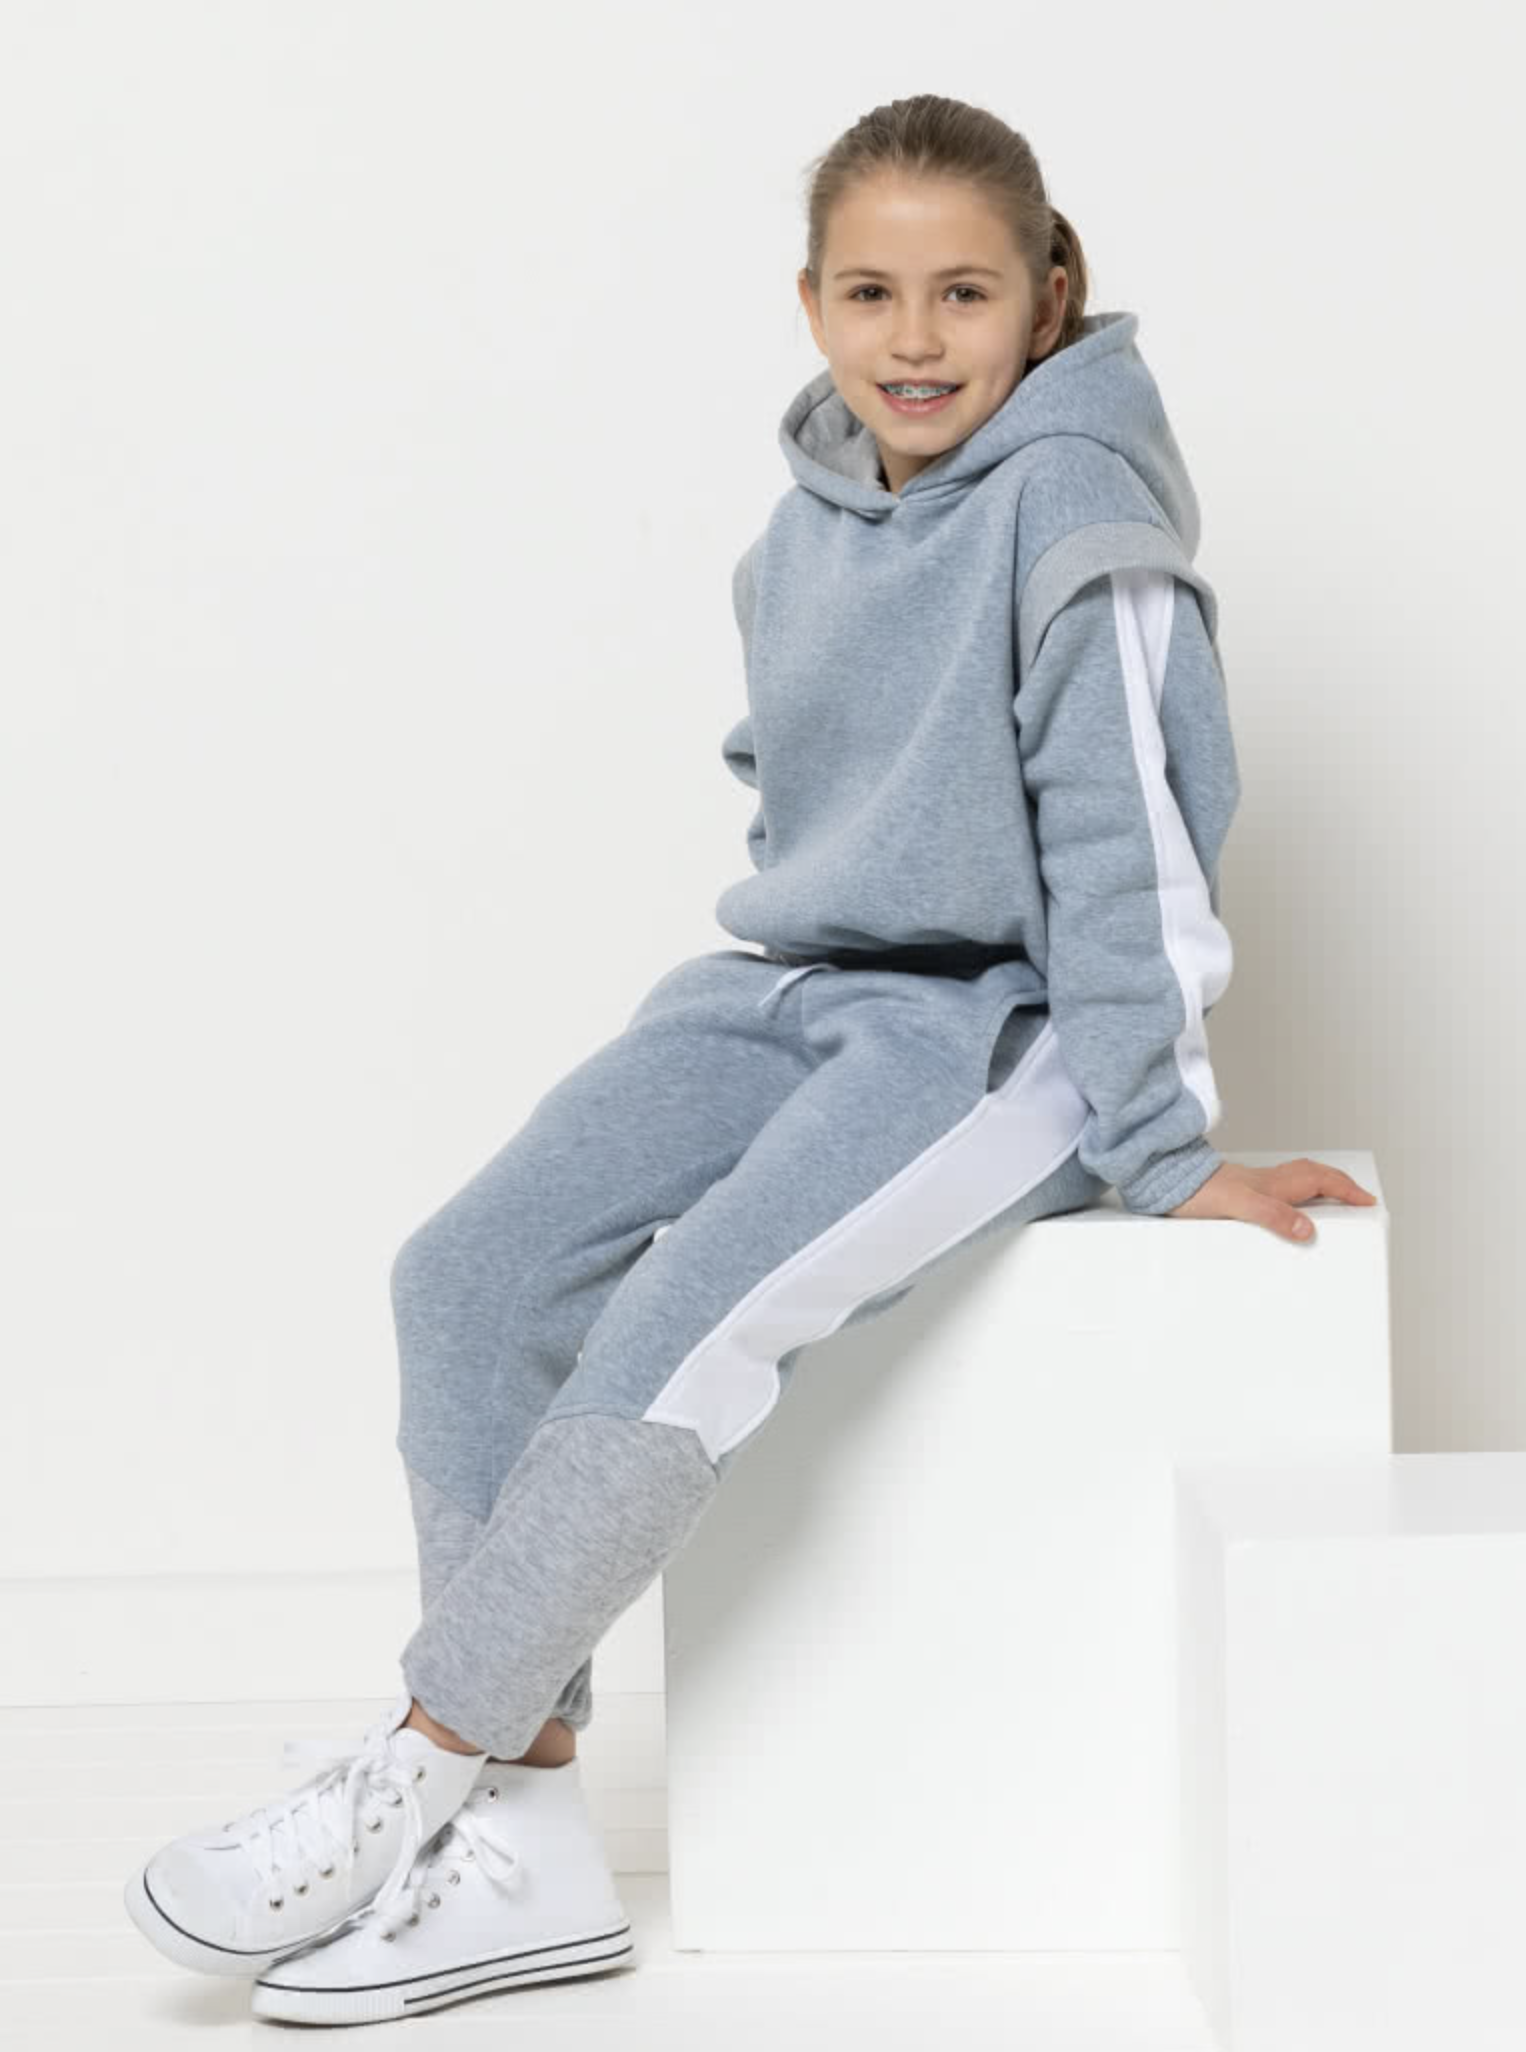 Style Arc Child/Teen Beckett Sweater